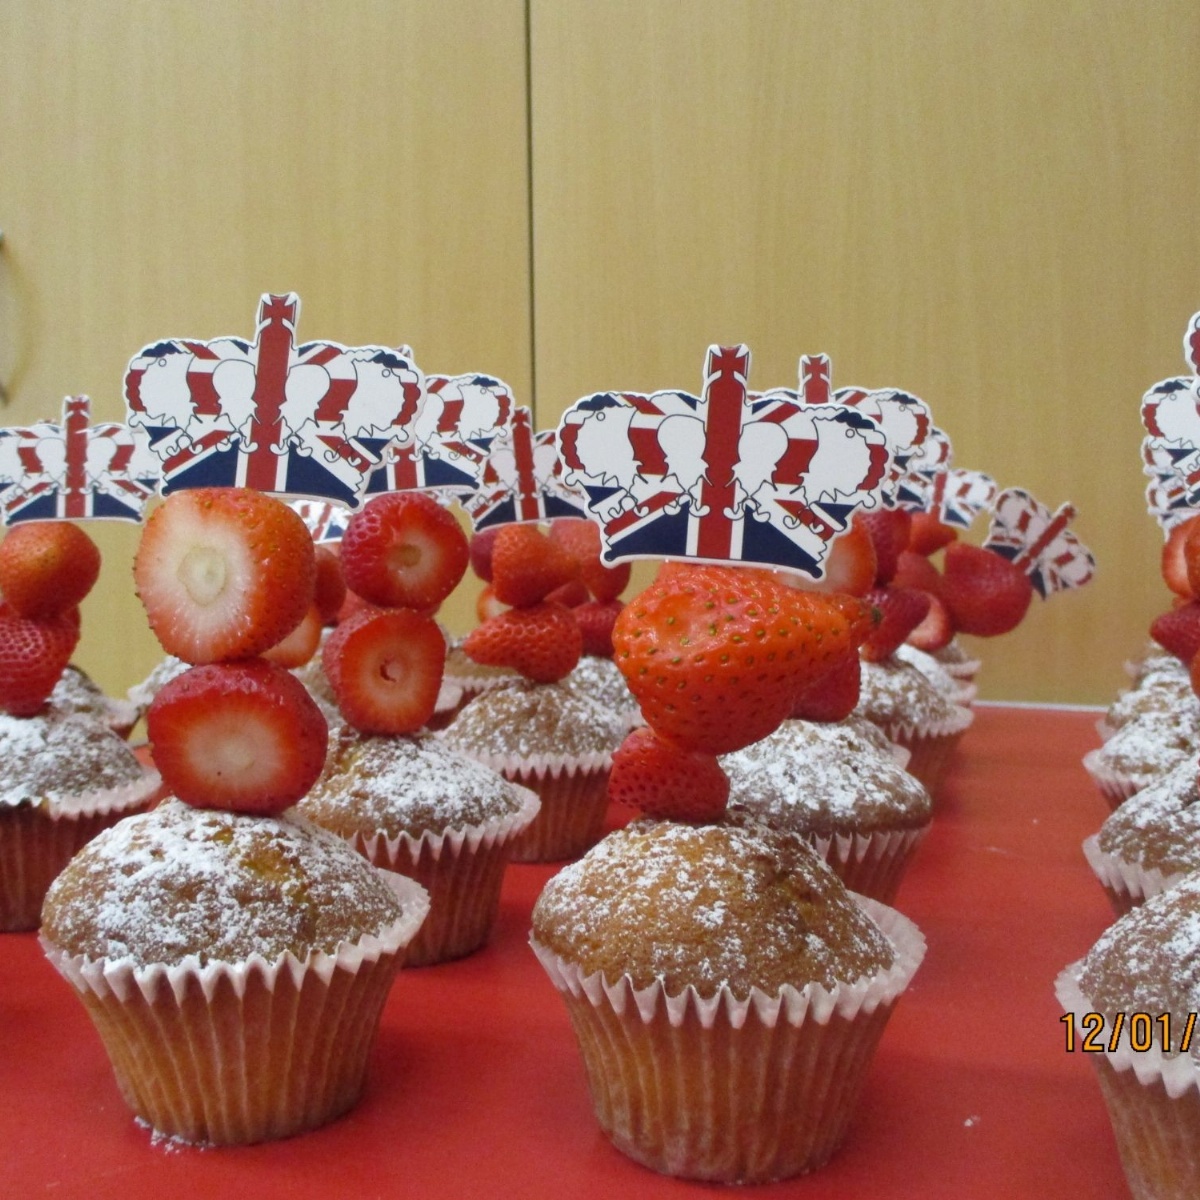 Grateley Primary School Coronation Celebrations!